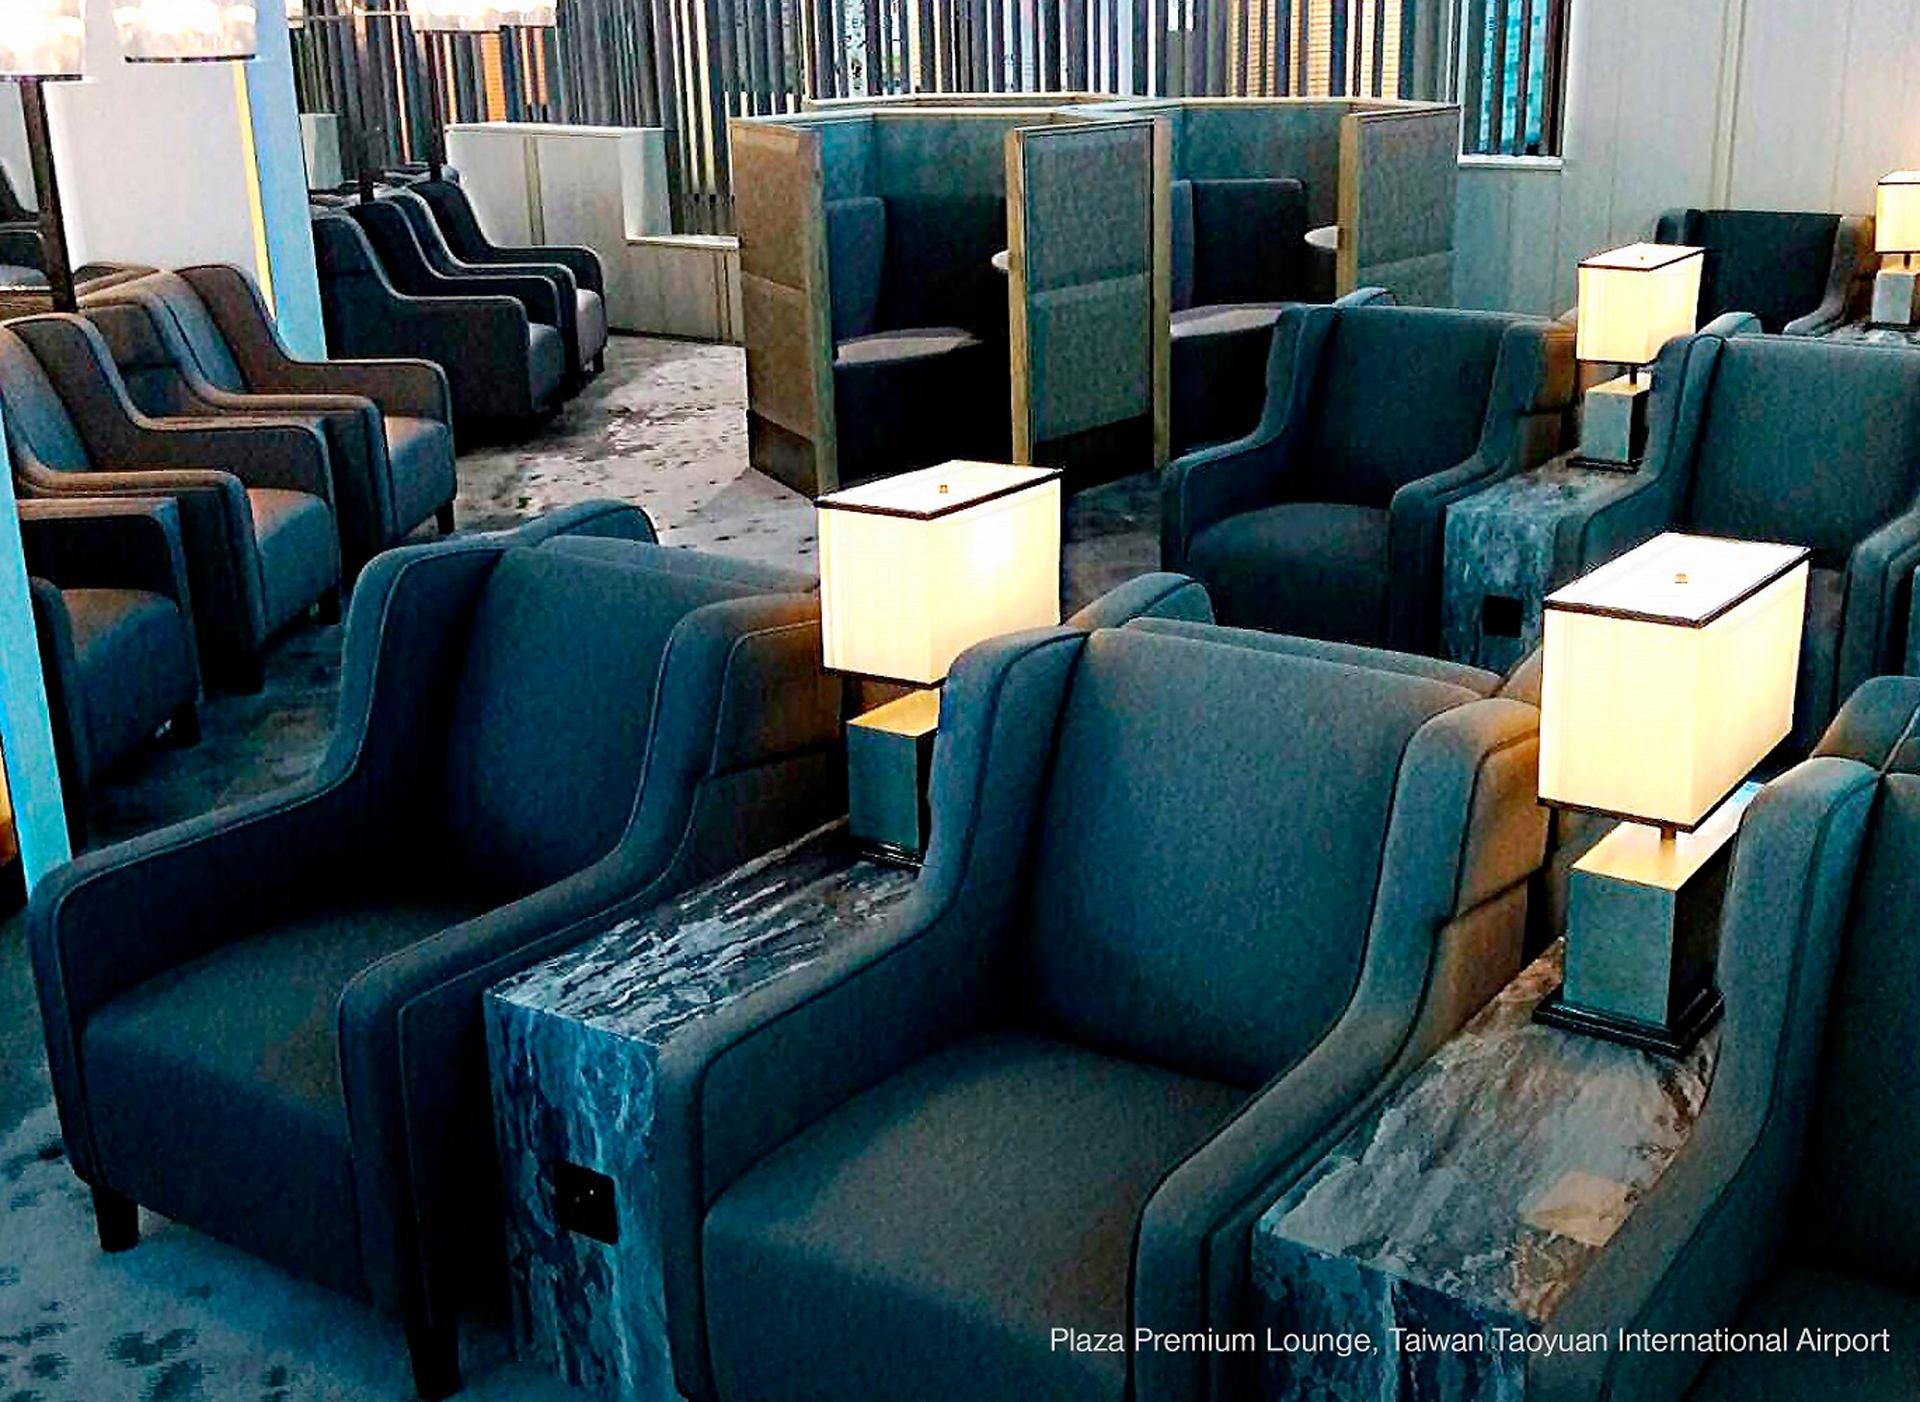 Plaza Premium Lounge (Zone A1) image 16 of 54